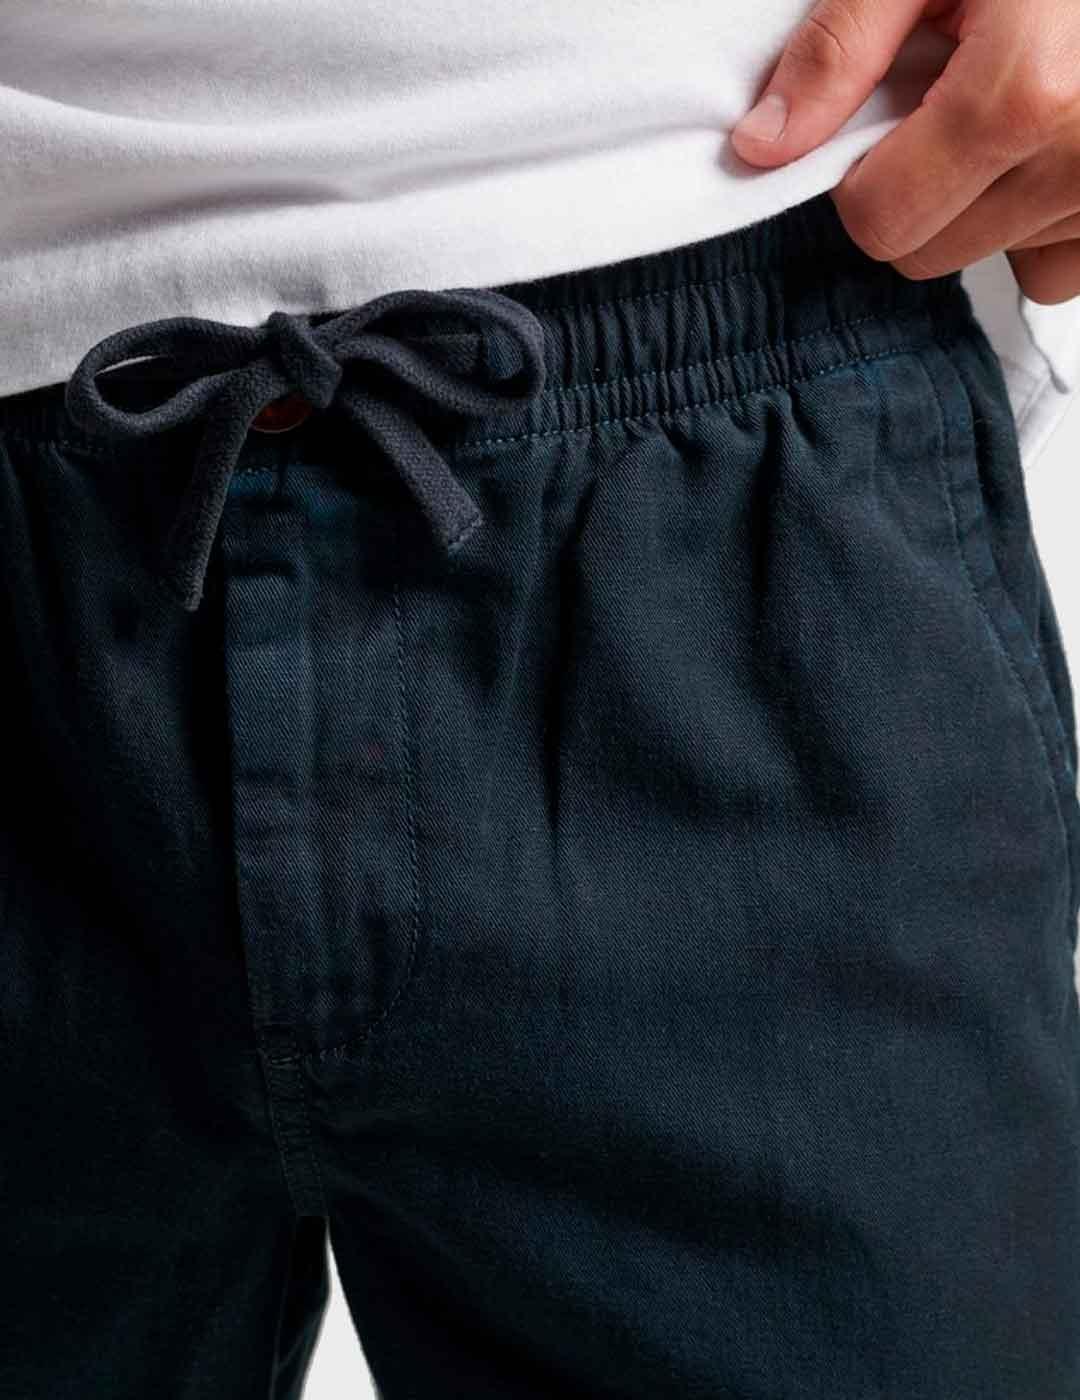 Pantalón corto Superdry Vintage Overdyes marino para hombre